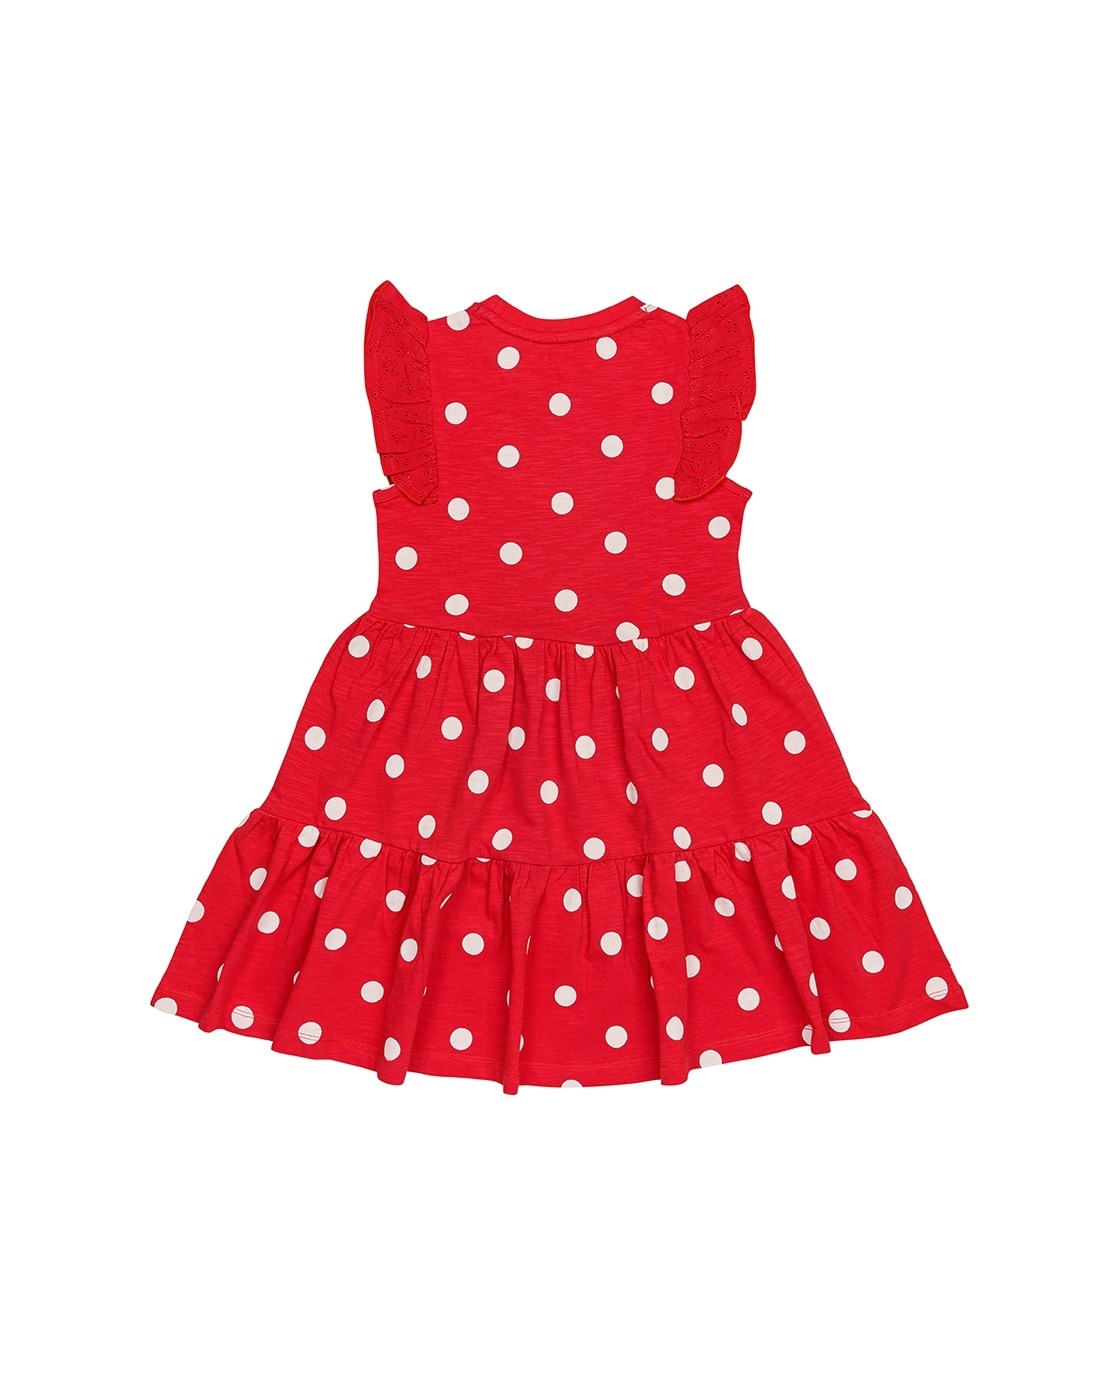 Minnie's black and white polka dot dress by aoi-kitsune -- Fur Affinity [dot]  net